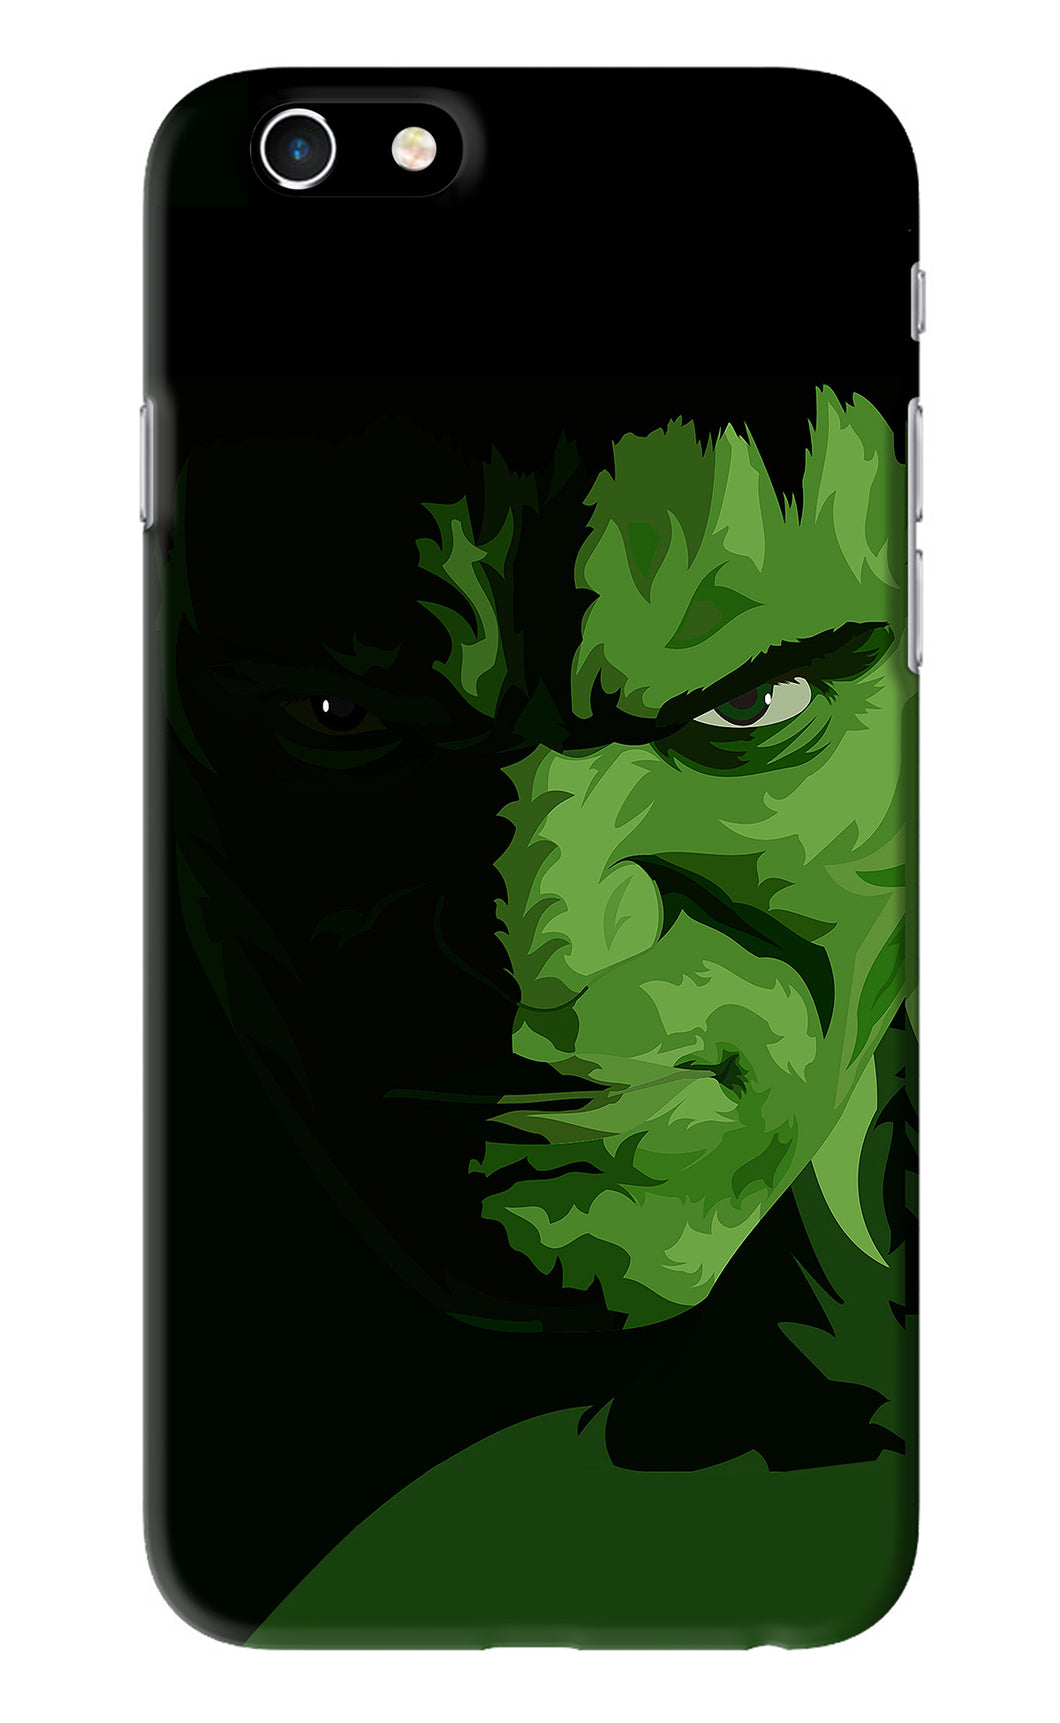 Hulk iPhone 6S Back Skin Wrap